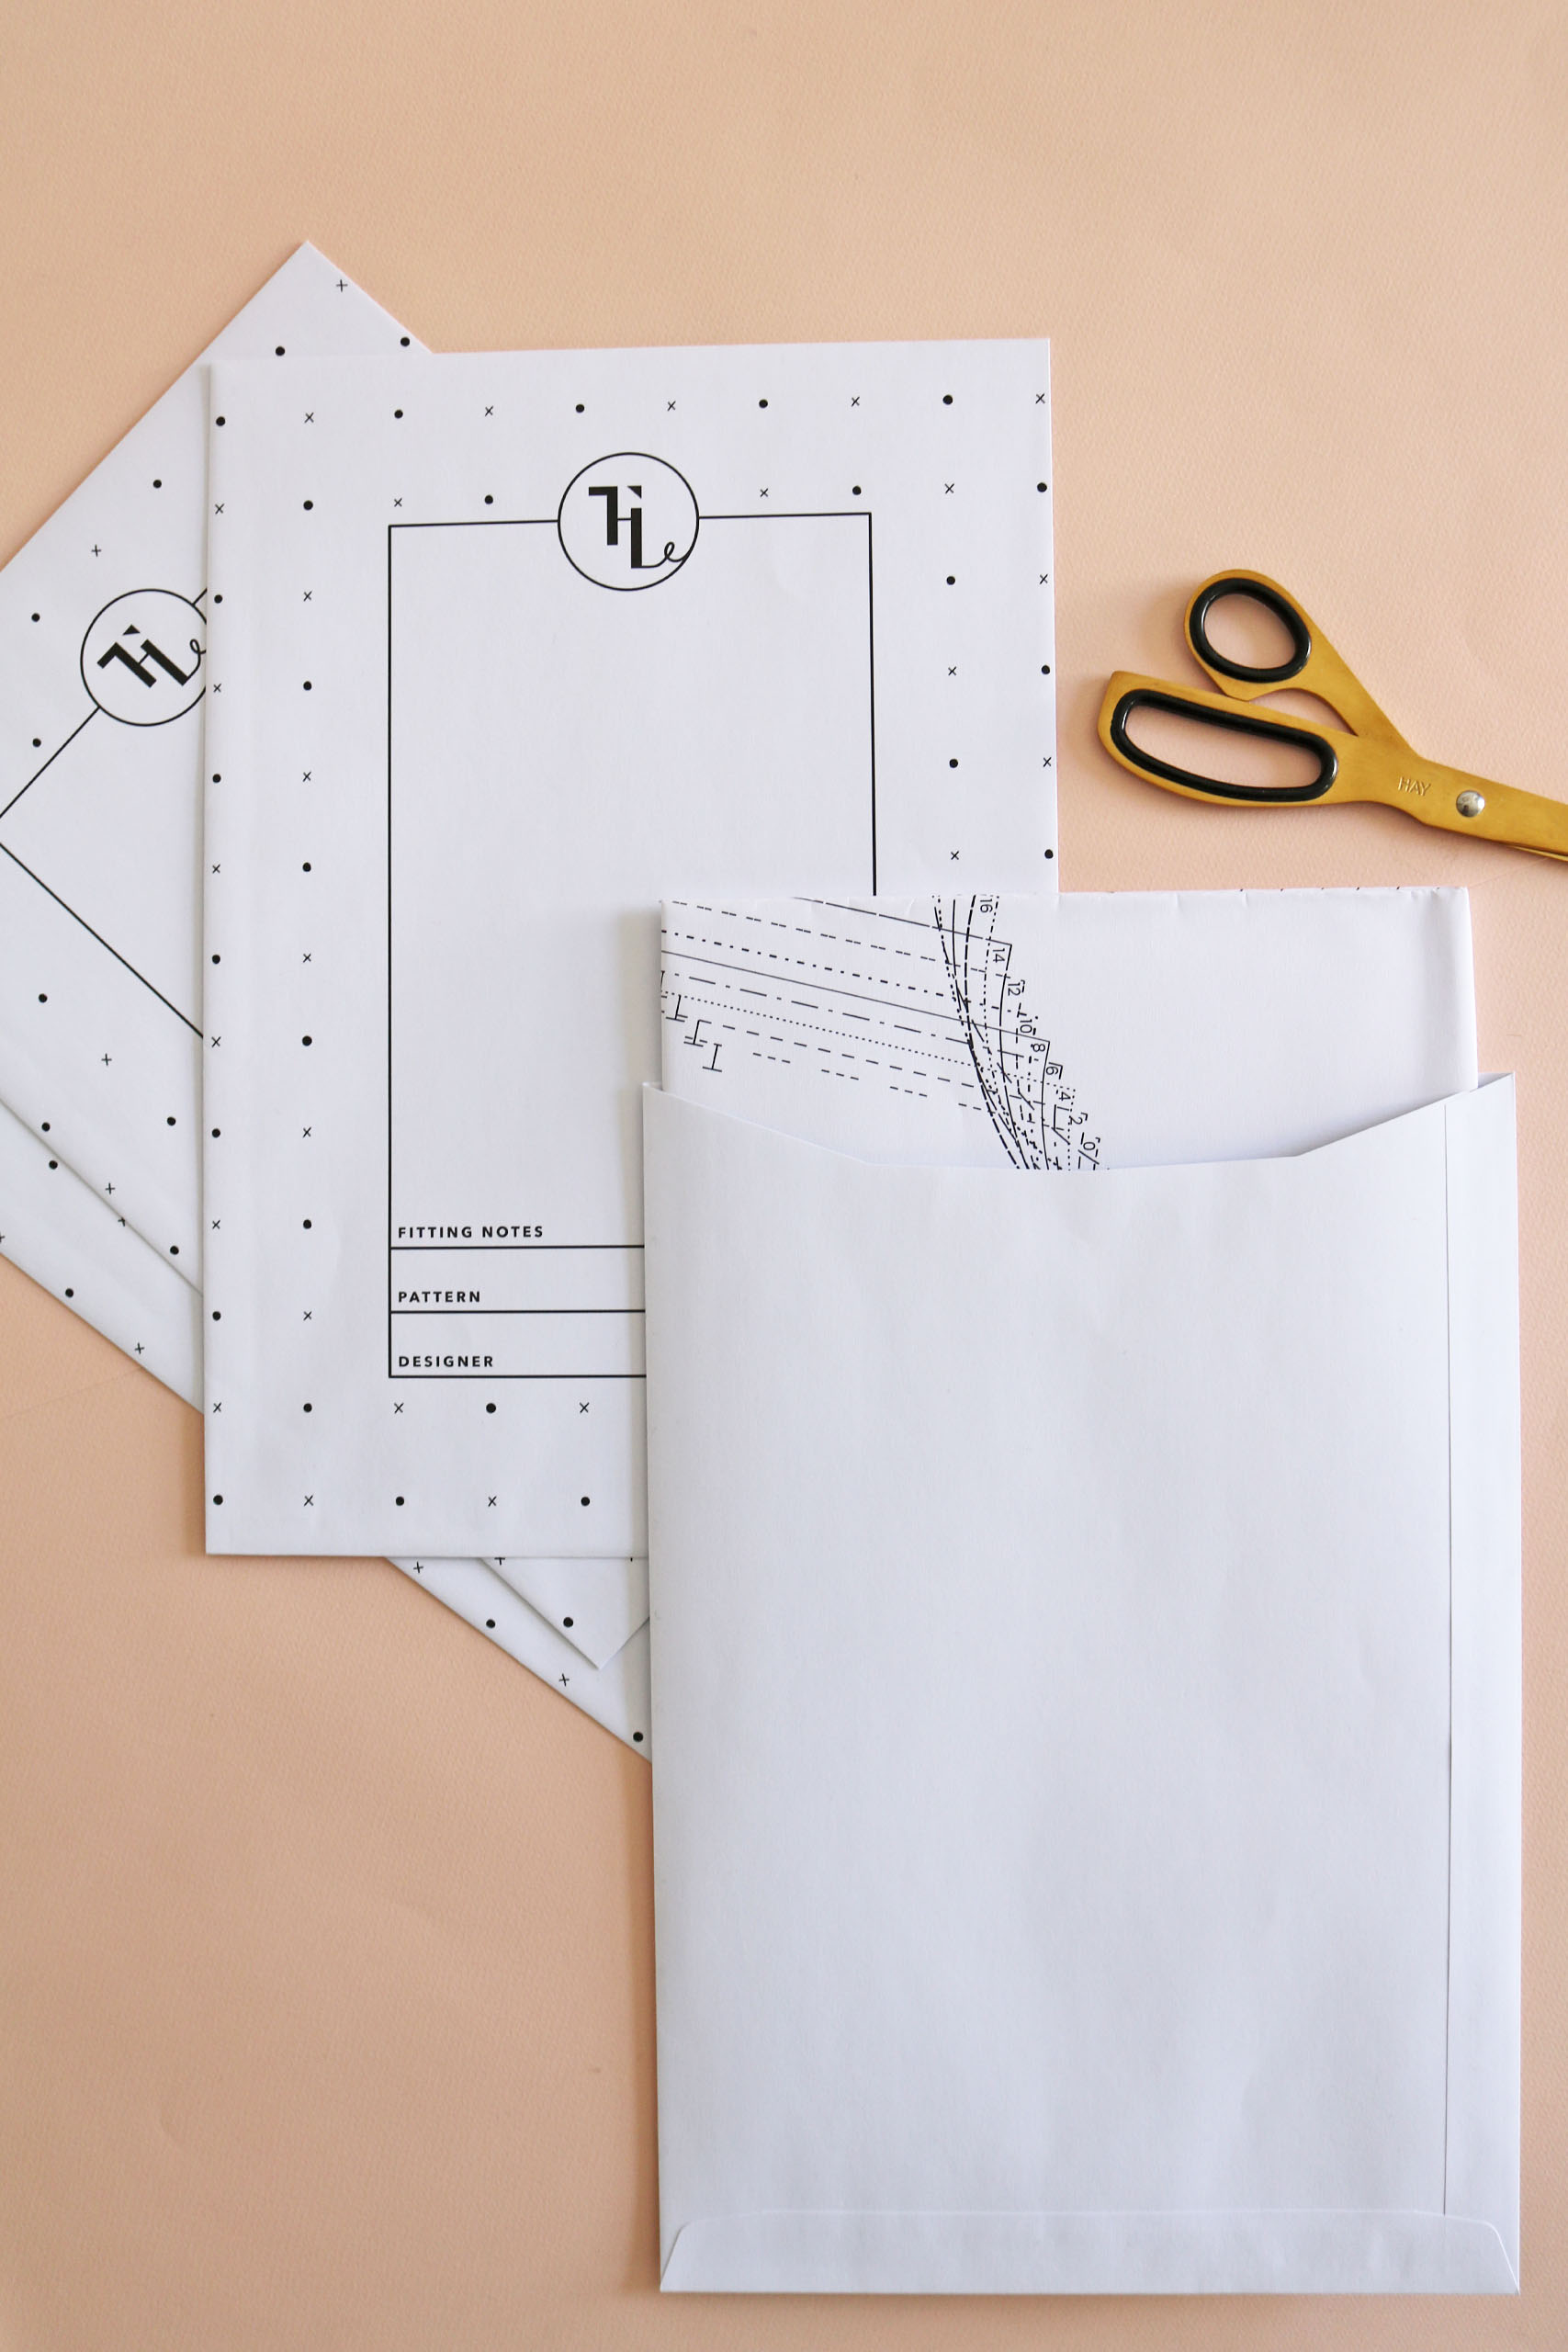 Sewing pattern storage envelopes - The Fold Line